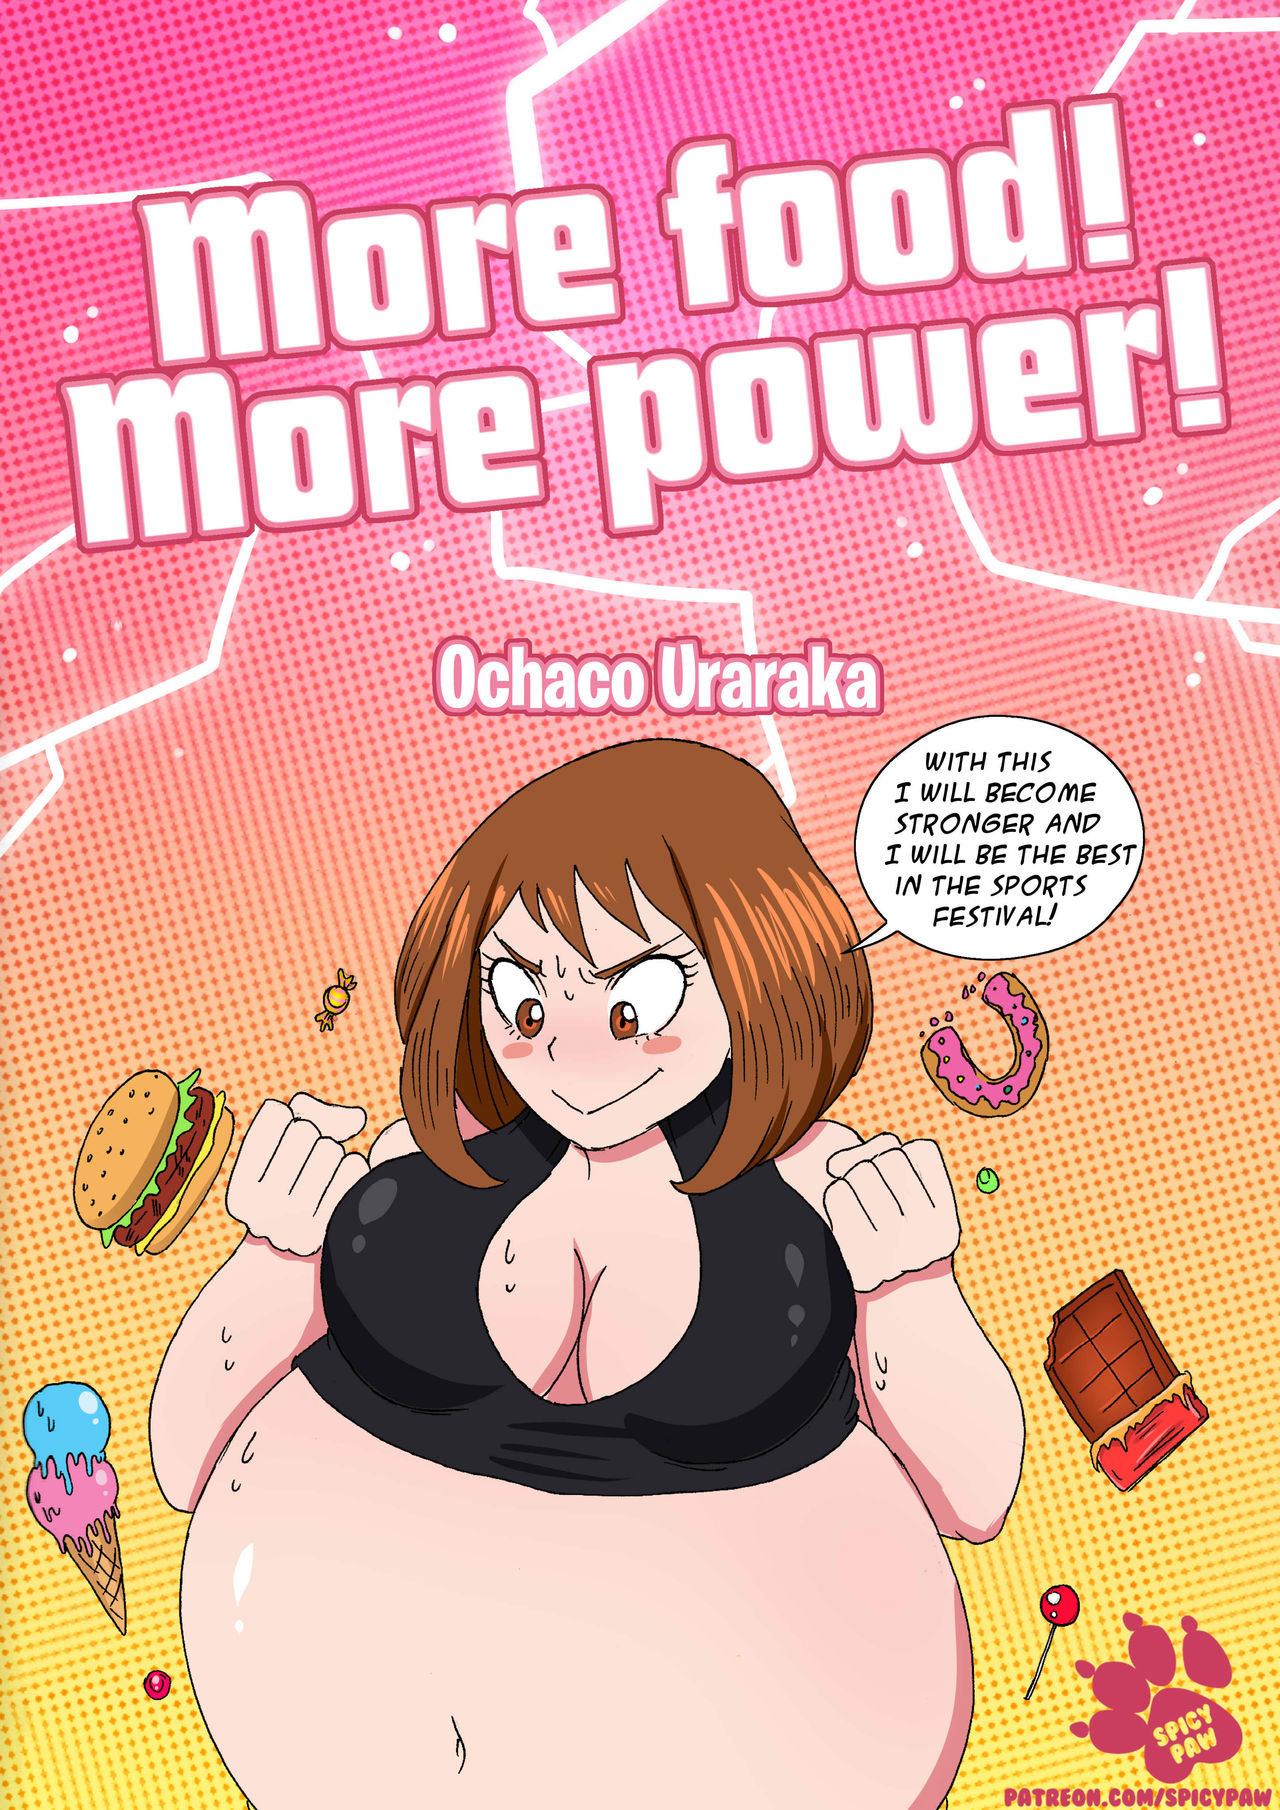 More Food! More Power! 1 Ochaco Urakara 1